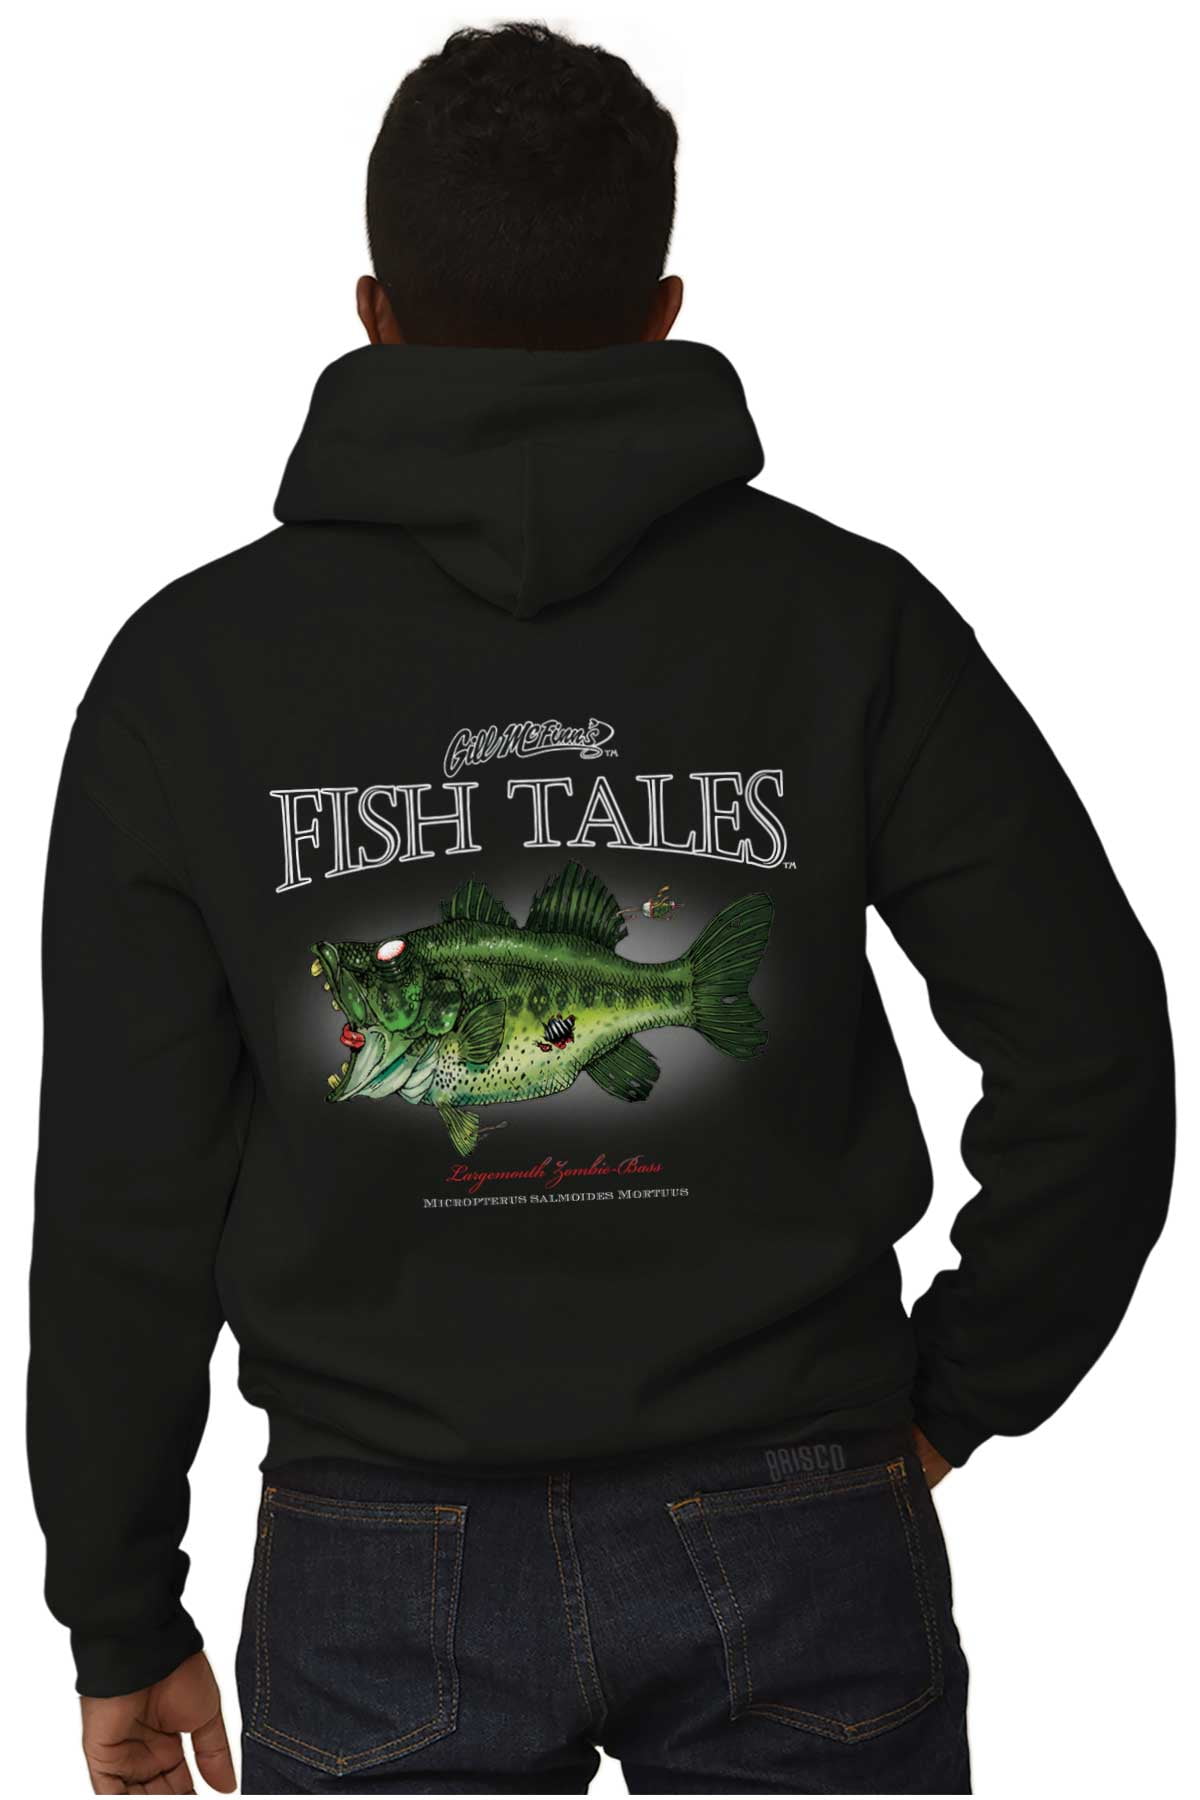 Fish Tales Zombie Bass Fishing Fisher Hoodie Sweatshirt Women Men Brisco  Brands 3X